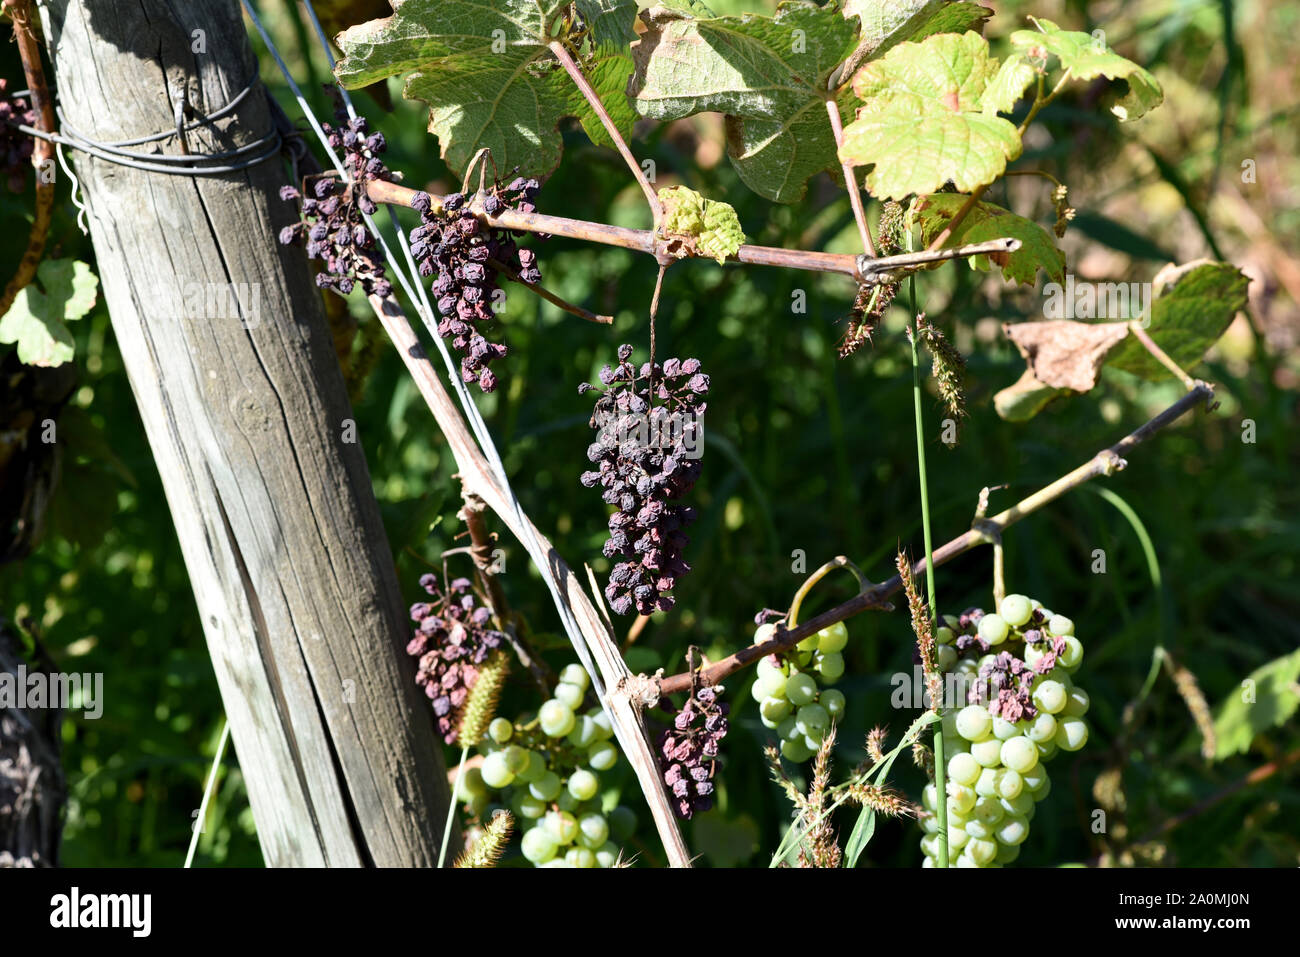 Durch grosse Hitze vetrocknete Weintrauben am Rebenstock. By high heat dried grapes on the vine stock. Stock Photo